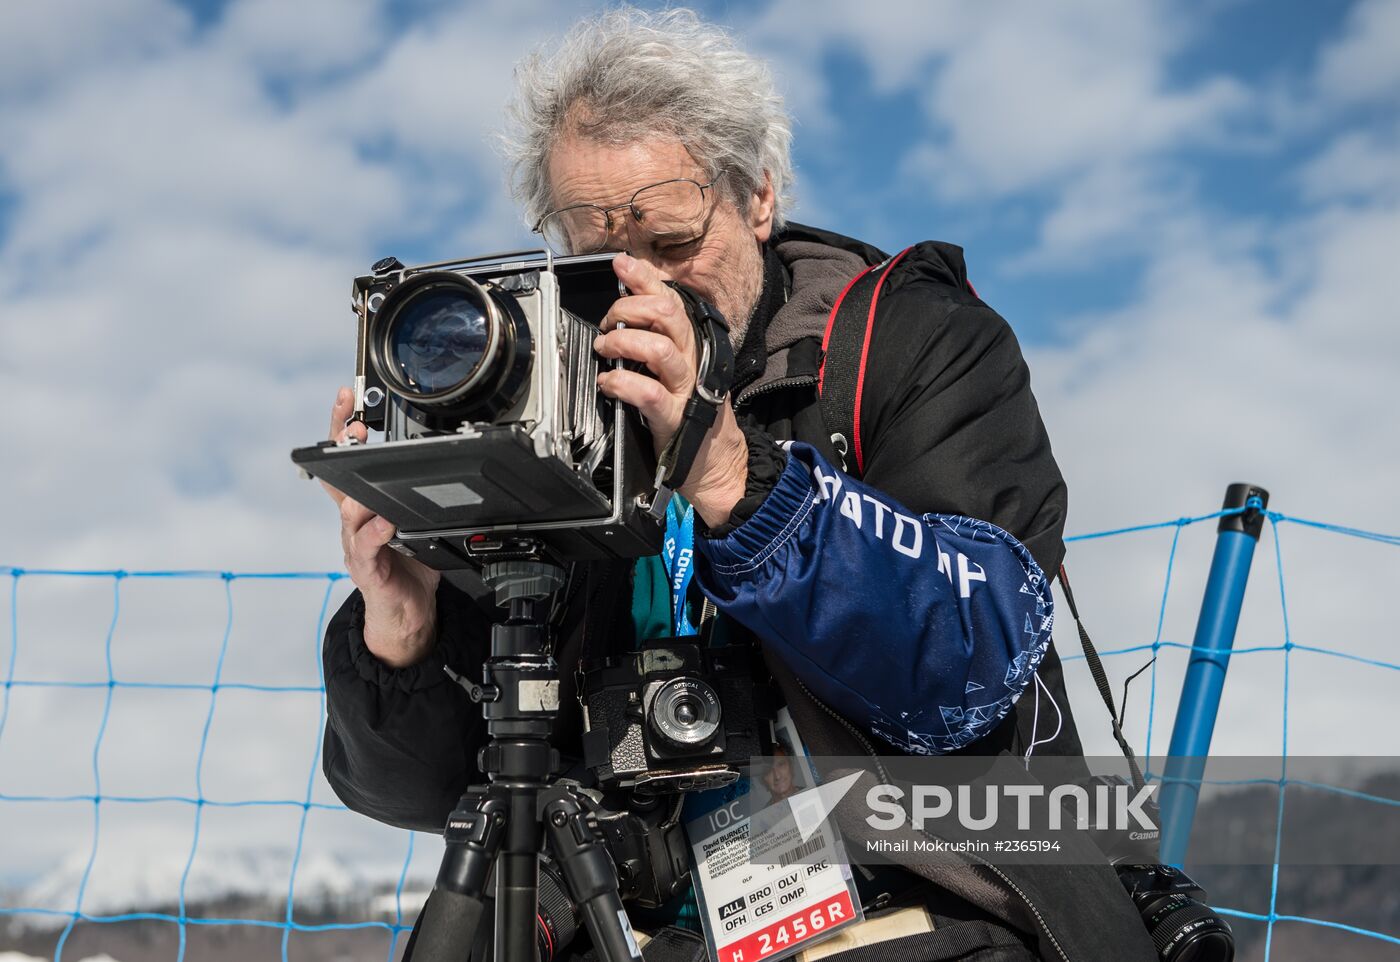 IOC official photographer David Burnett